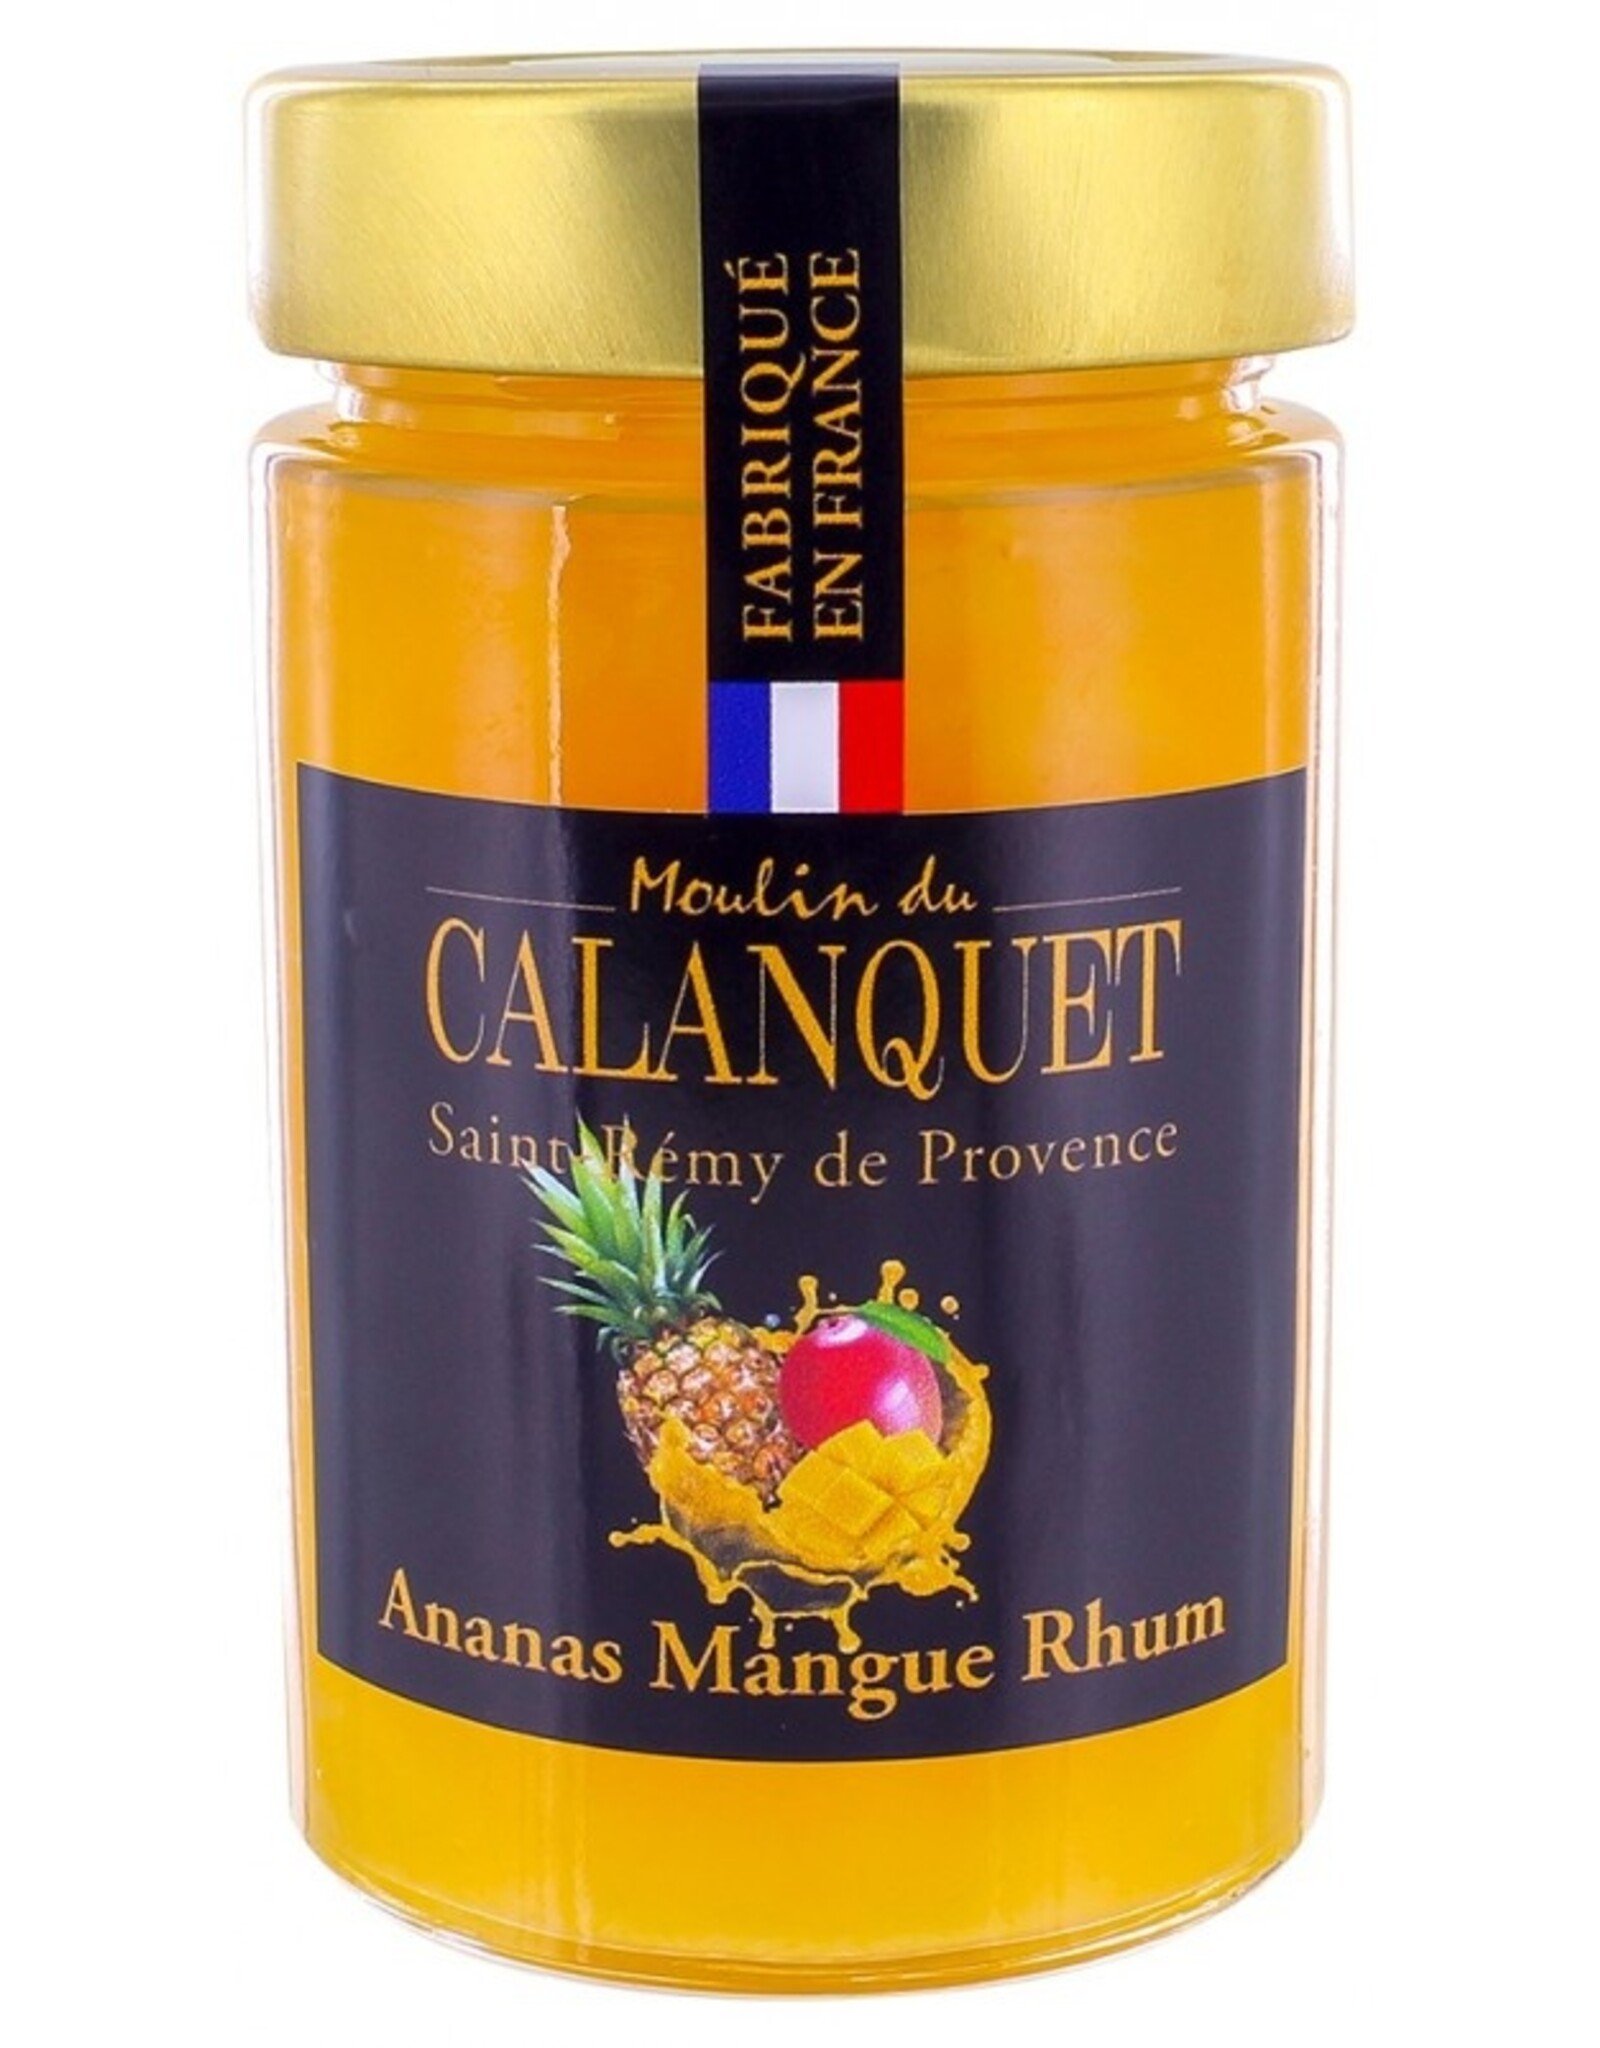 Moulin du Calanquet Confiture Ananas Mangue Rhum / Rum, Pineapple & mango Jam 220 g